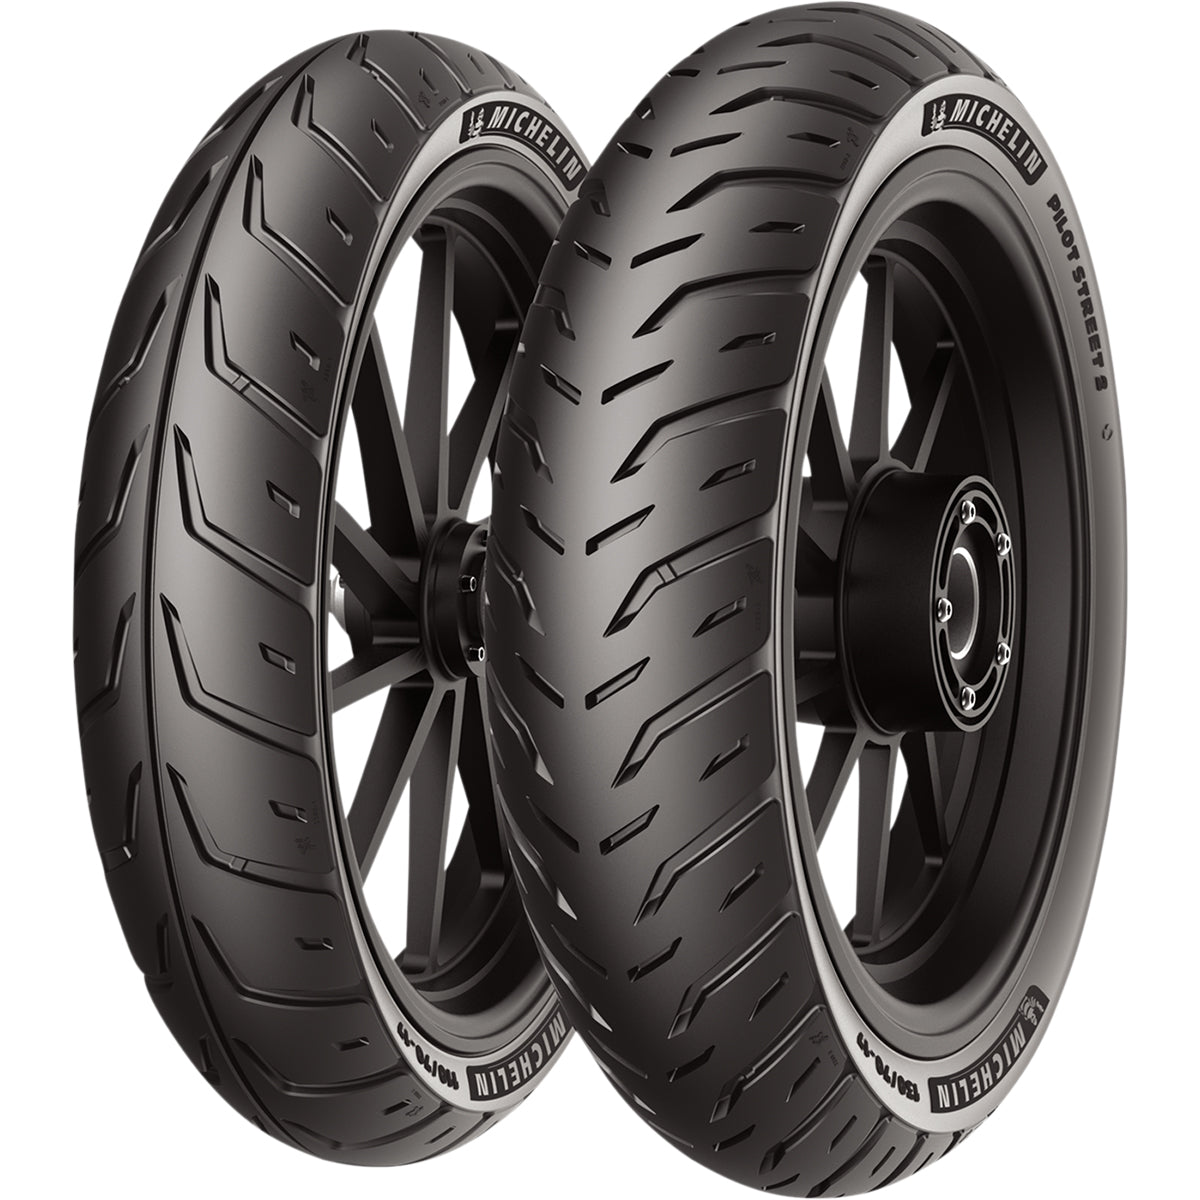 Michelin Pilot Street 2 17" Front Street Tires-0305